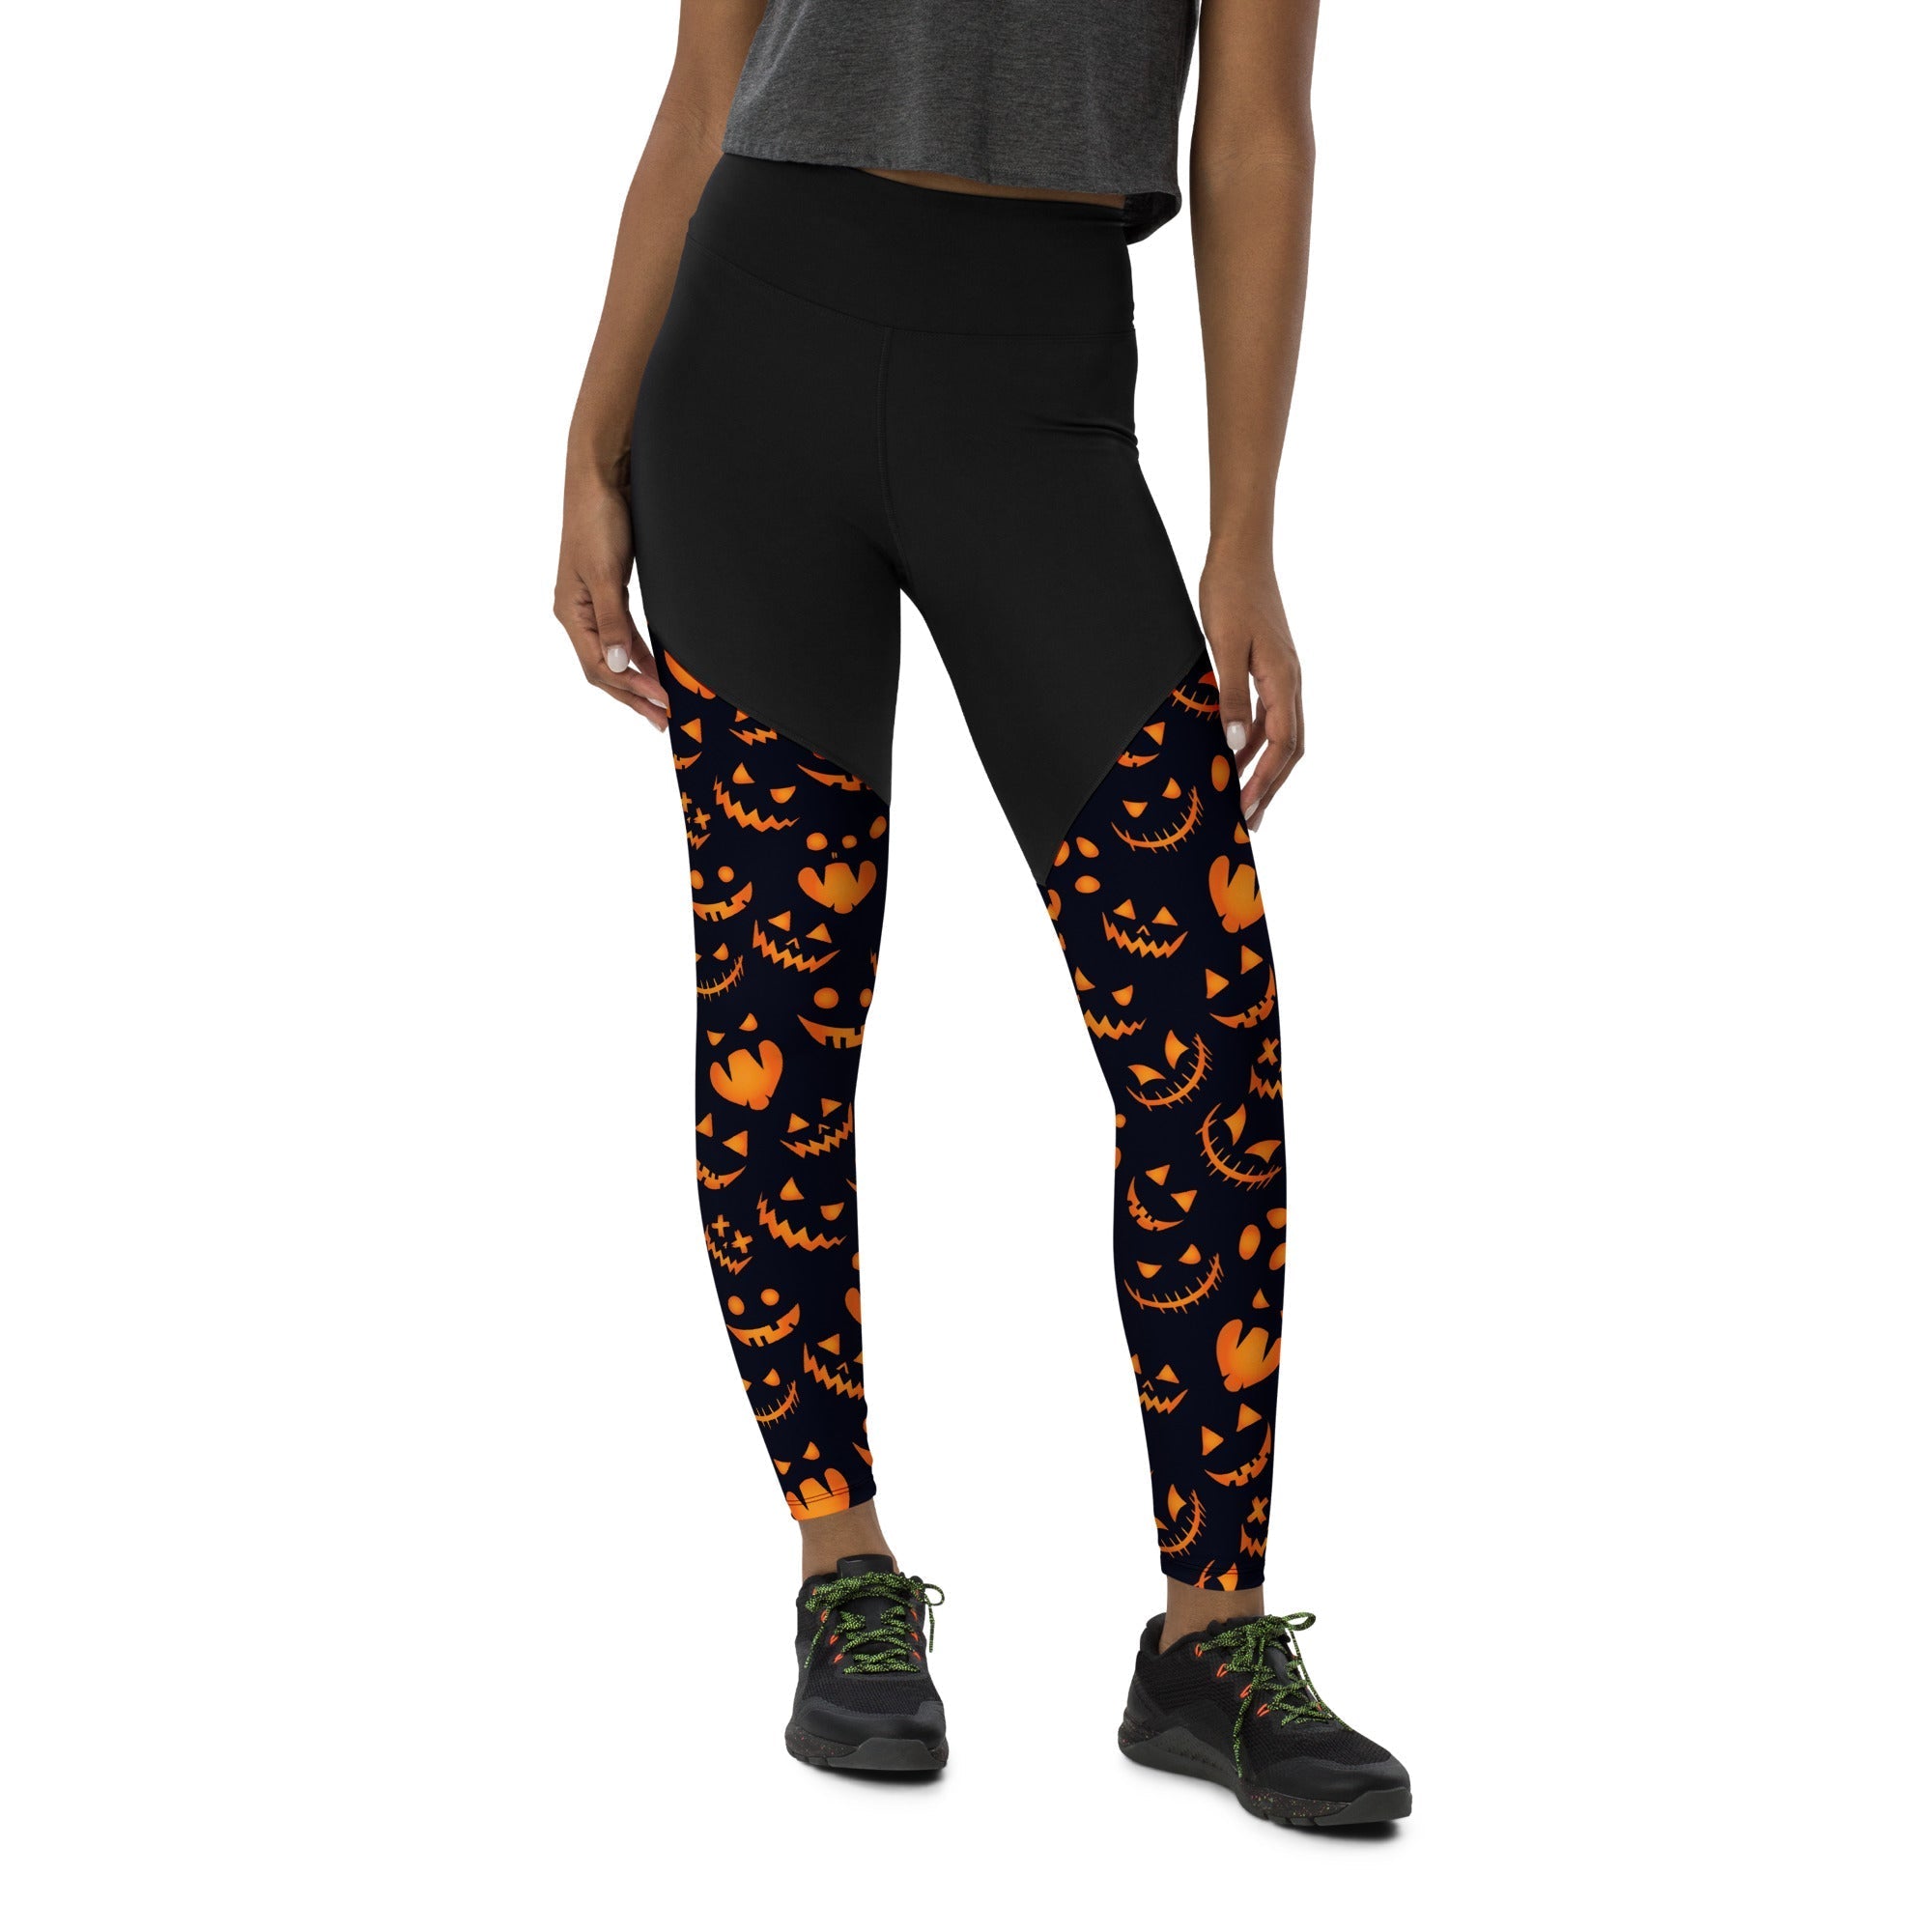 Spooktacular Halloween Compression Leggings: Women's Halloween Outfits  FIERCEPULSE